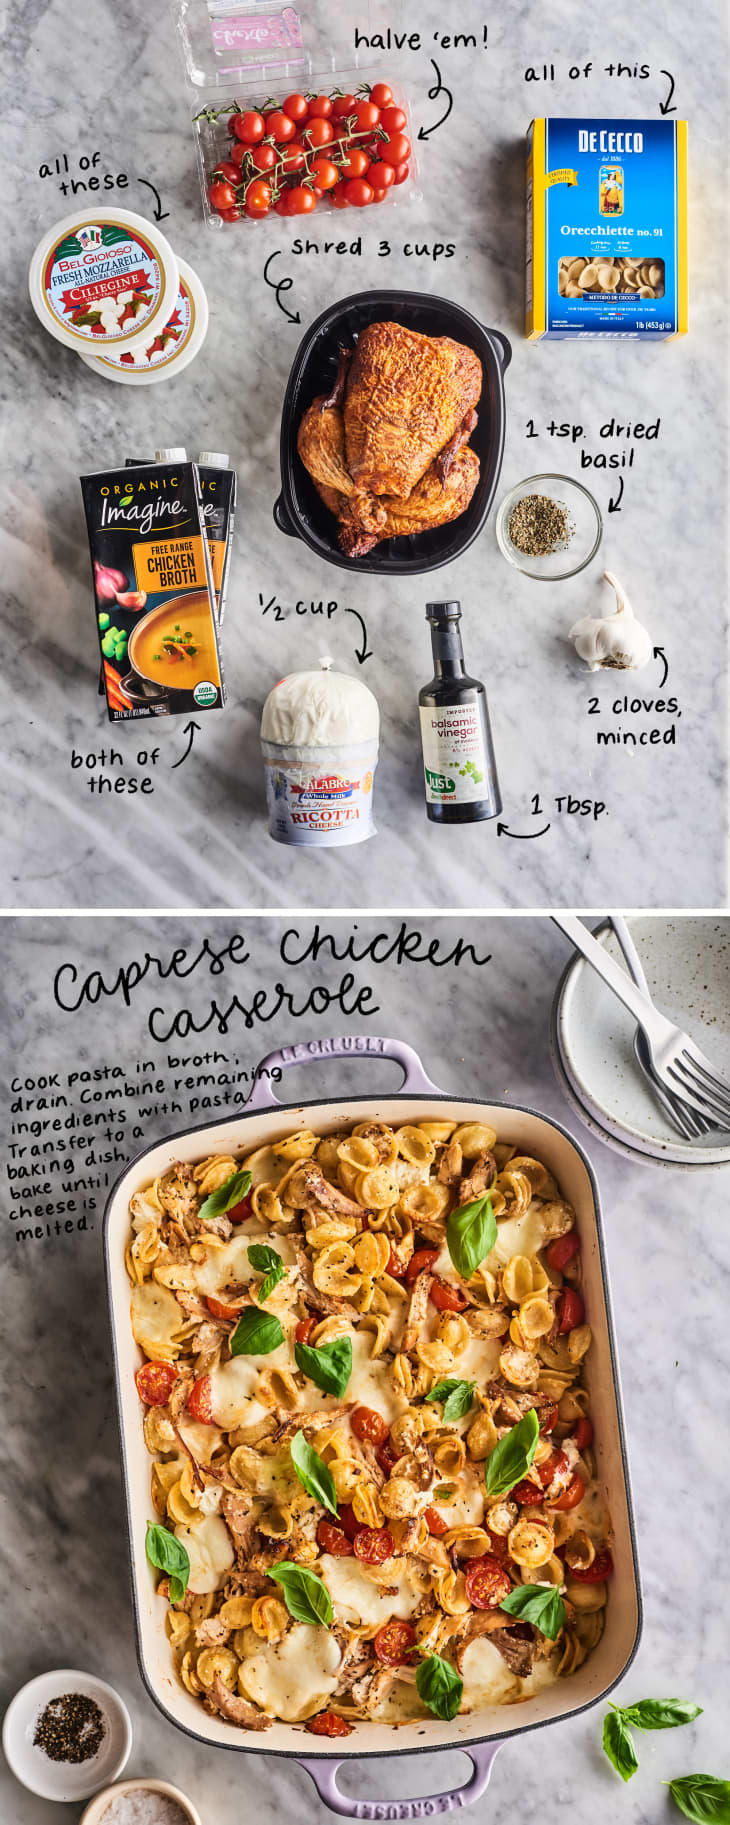 caprese chicken casserole ingredients and dish